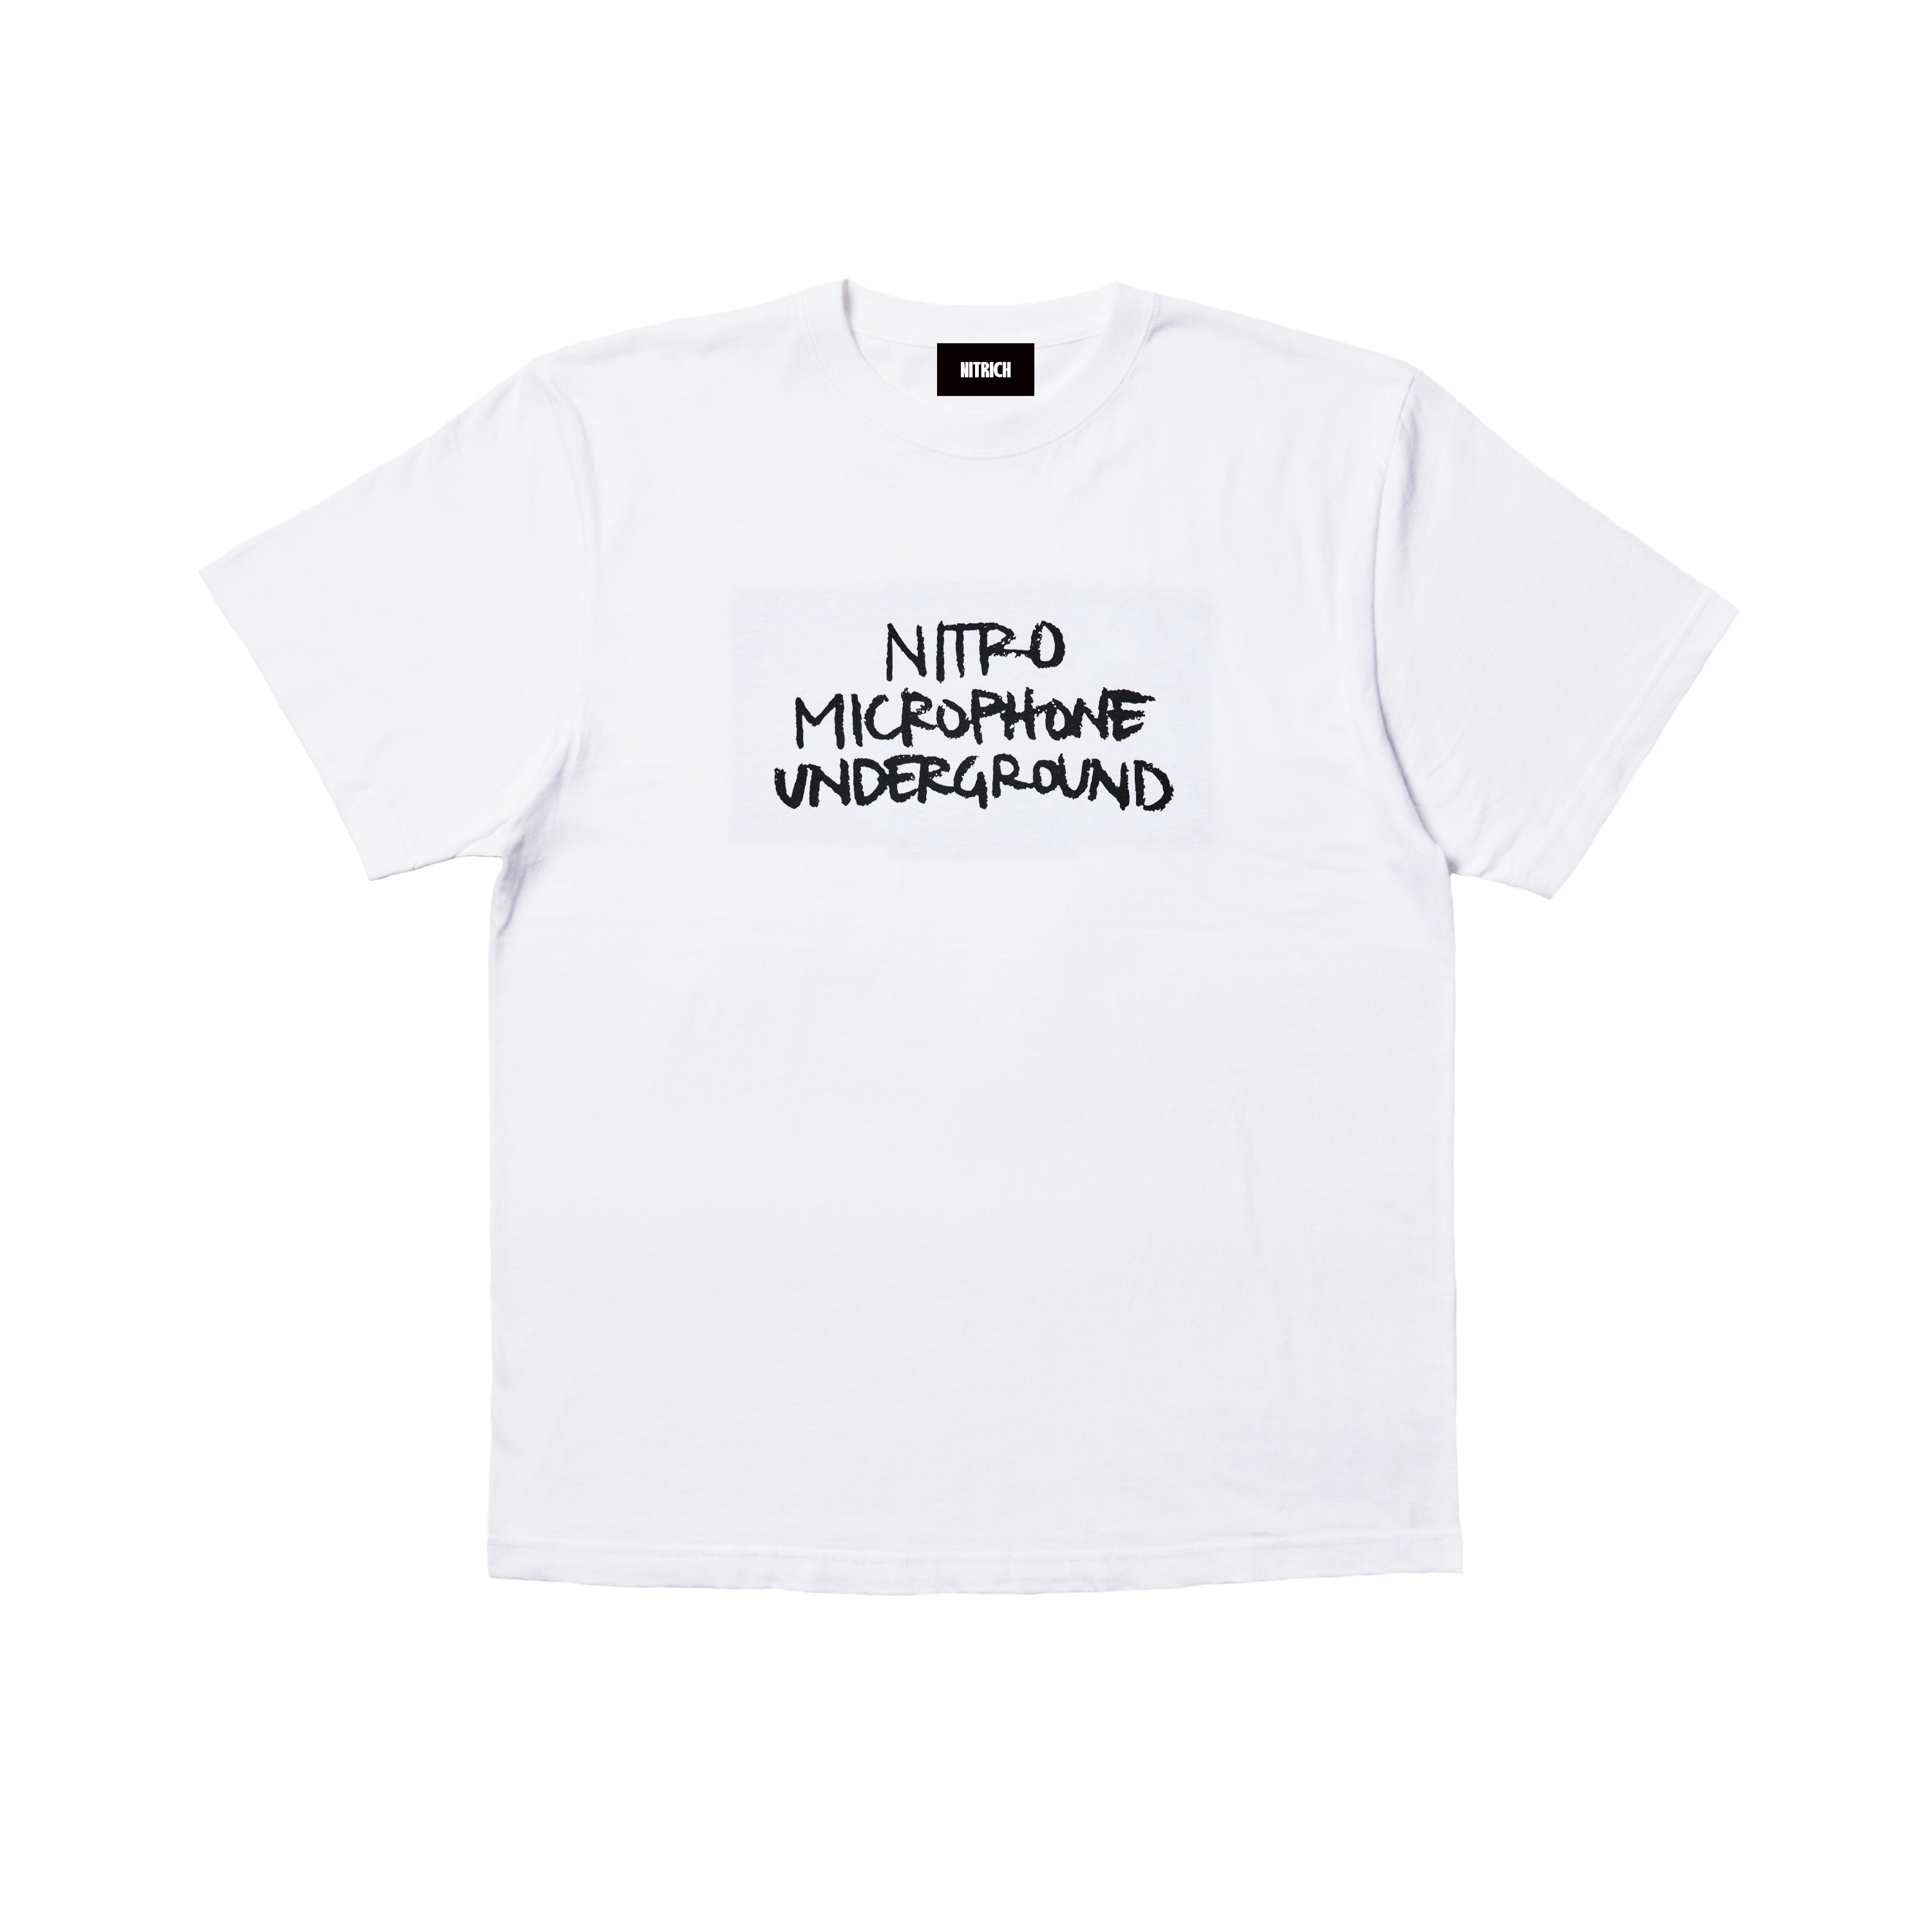 NITRO MICROPHONE UNDERGROUND B+ TEE - Tシャツ/カットソー(半袖/袖なし)